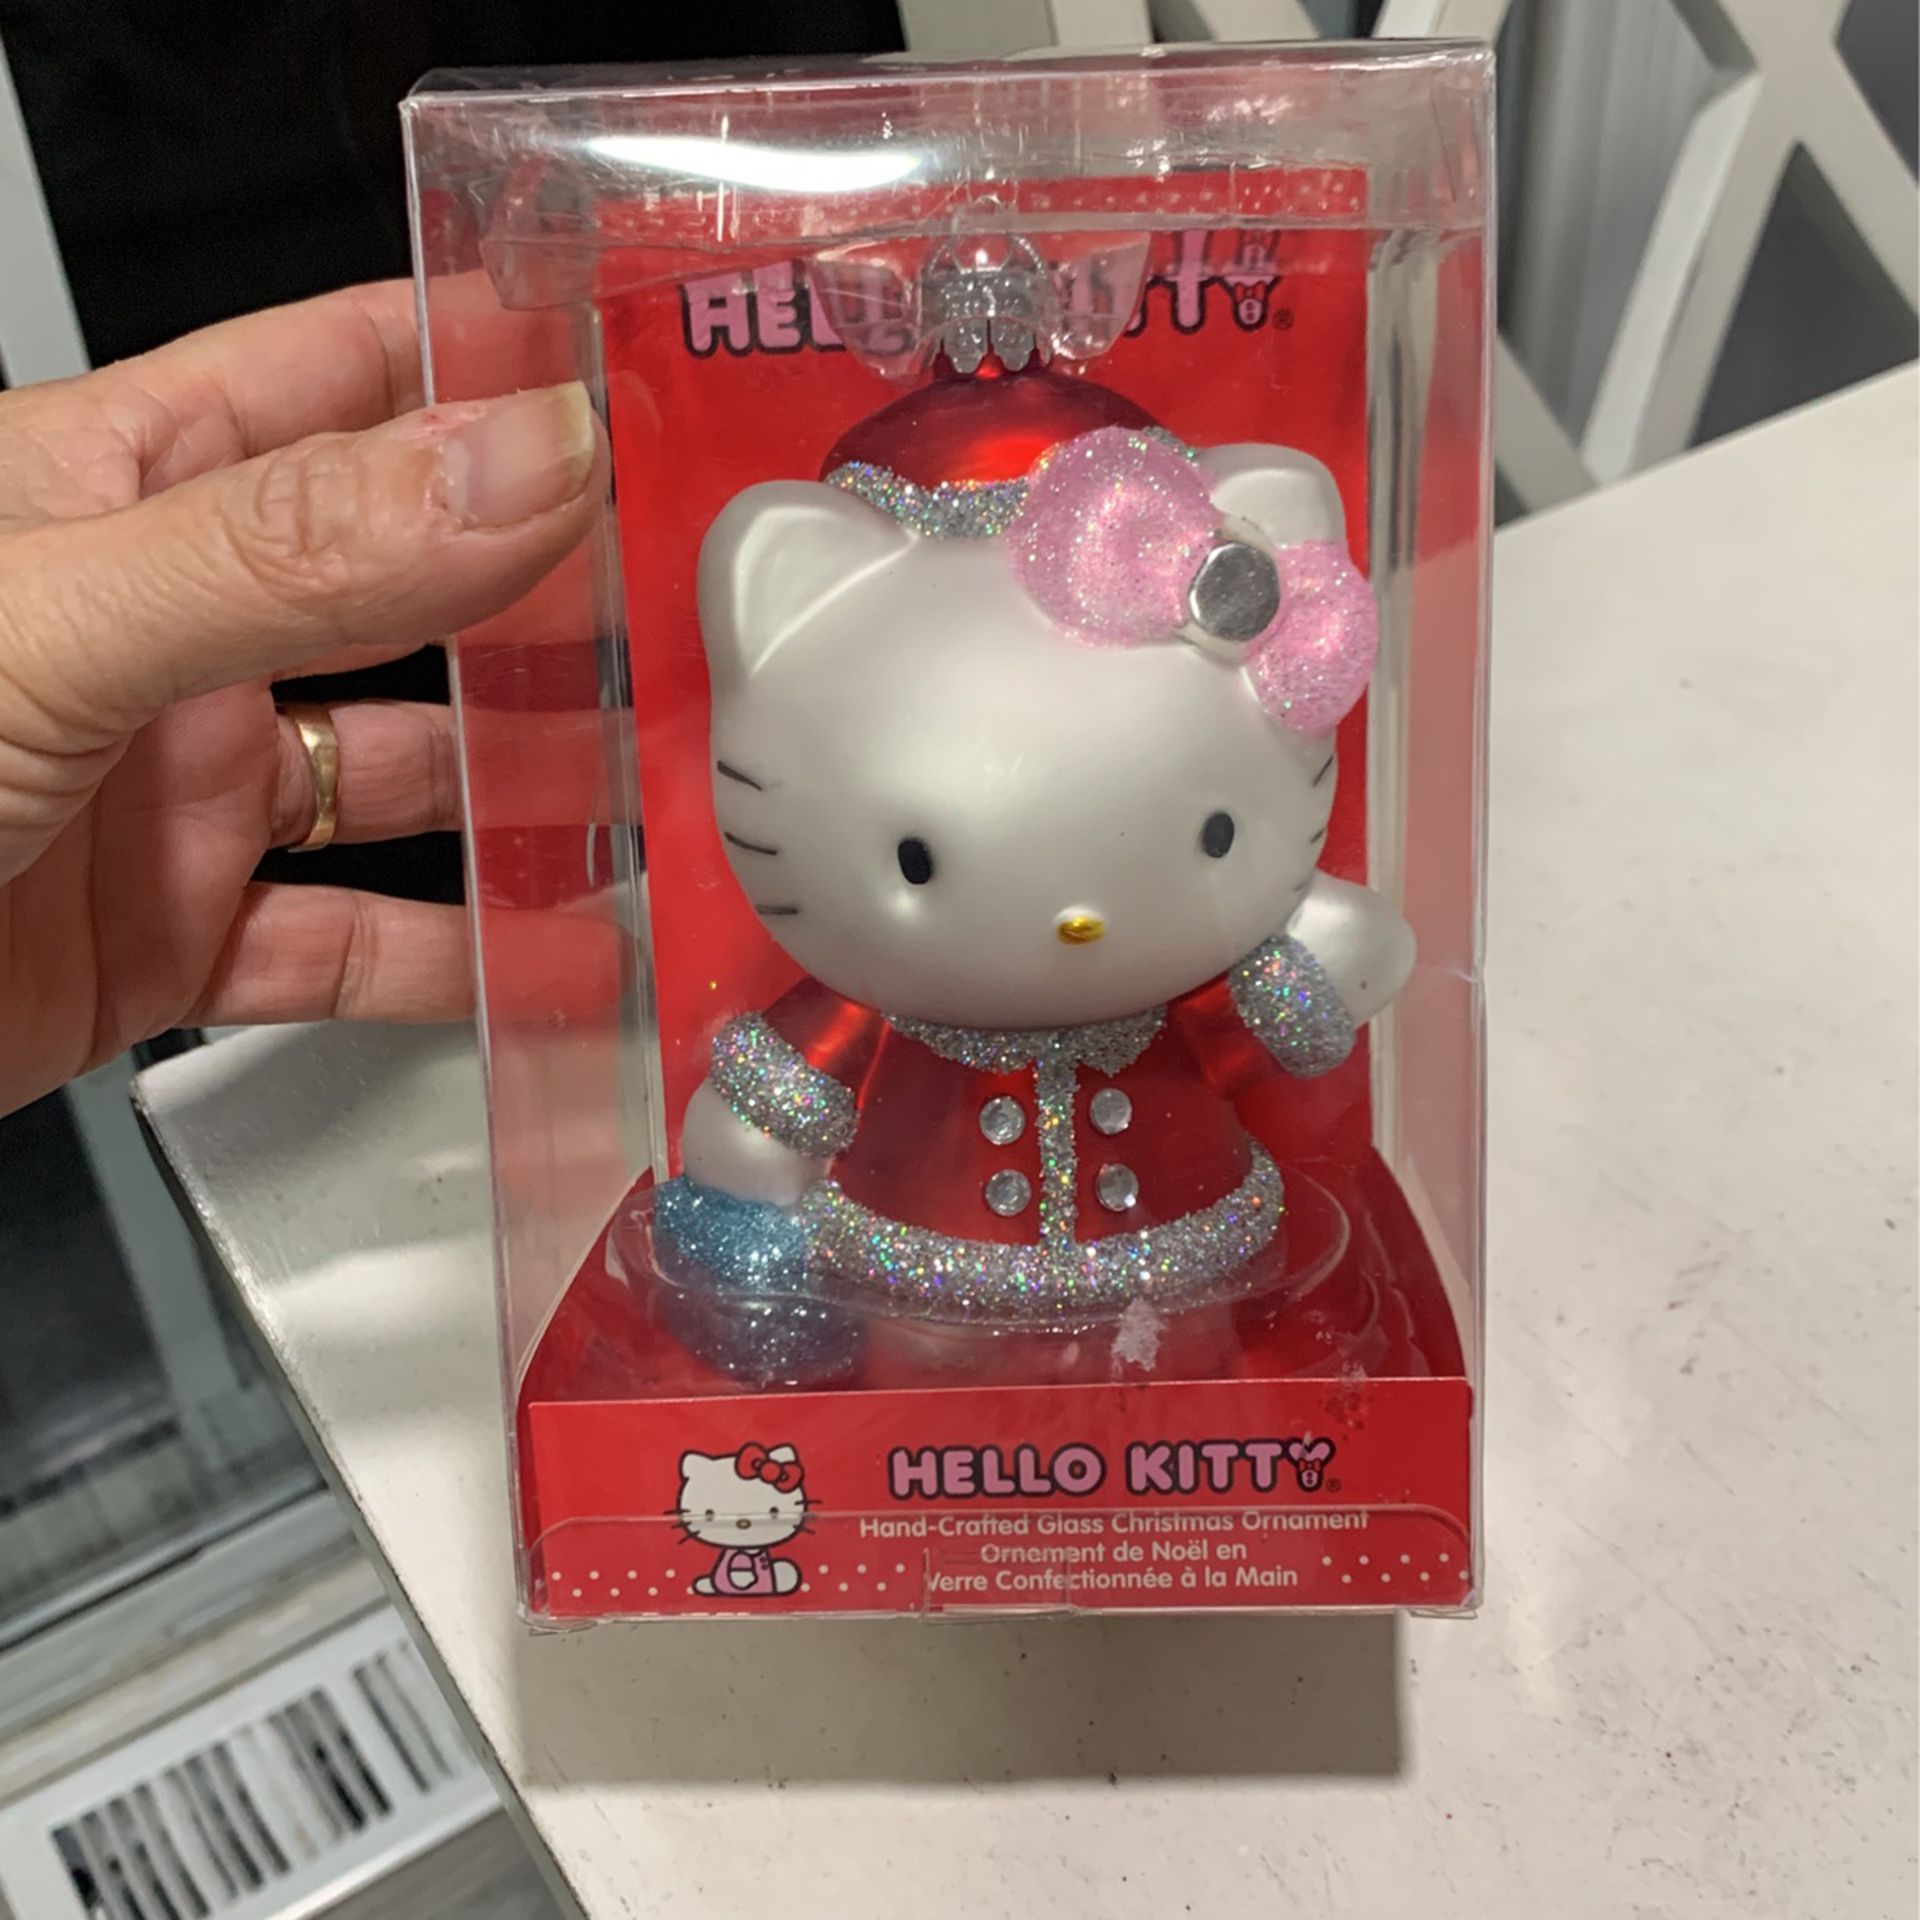 Hello Kitty Glass Ornament